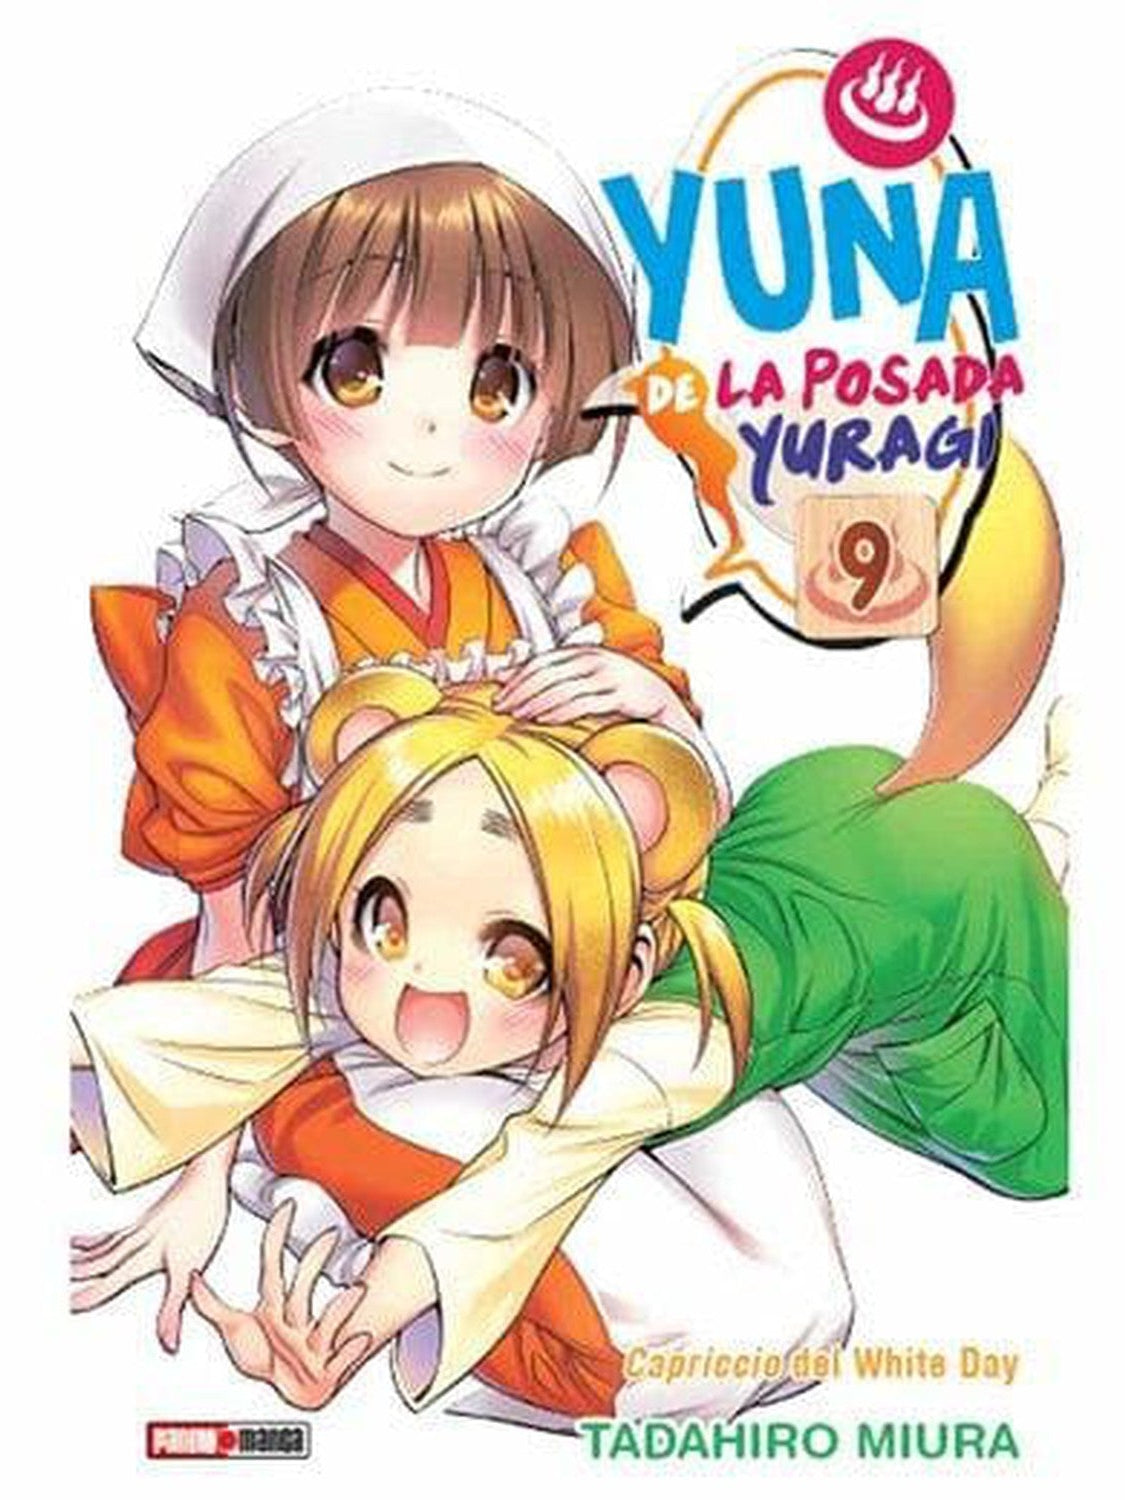 Yuna de la Posada Yuragi #9